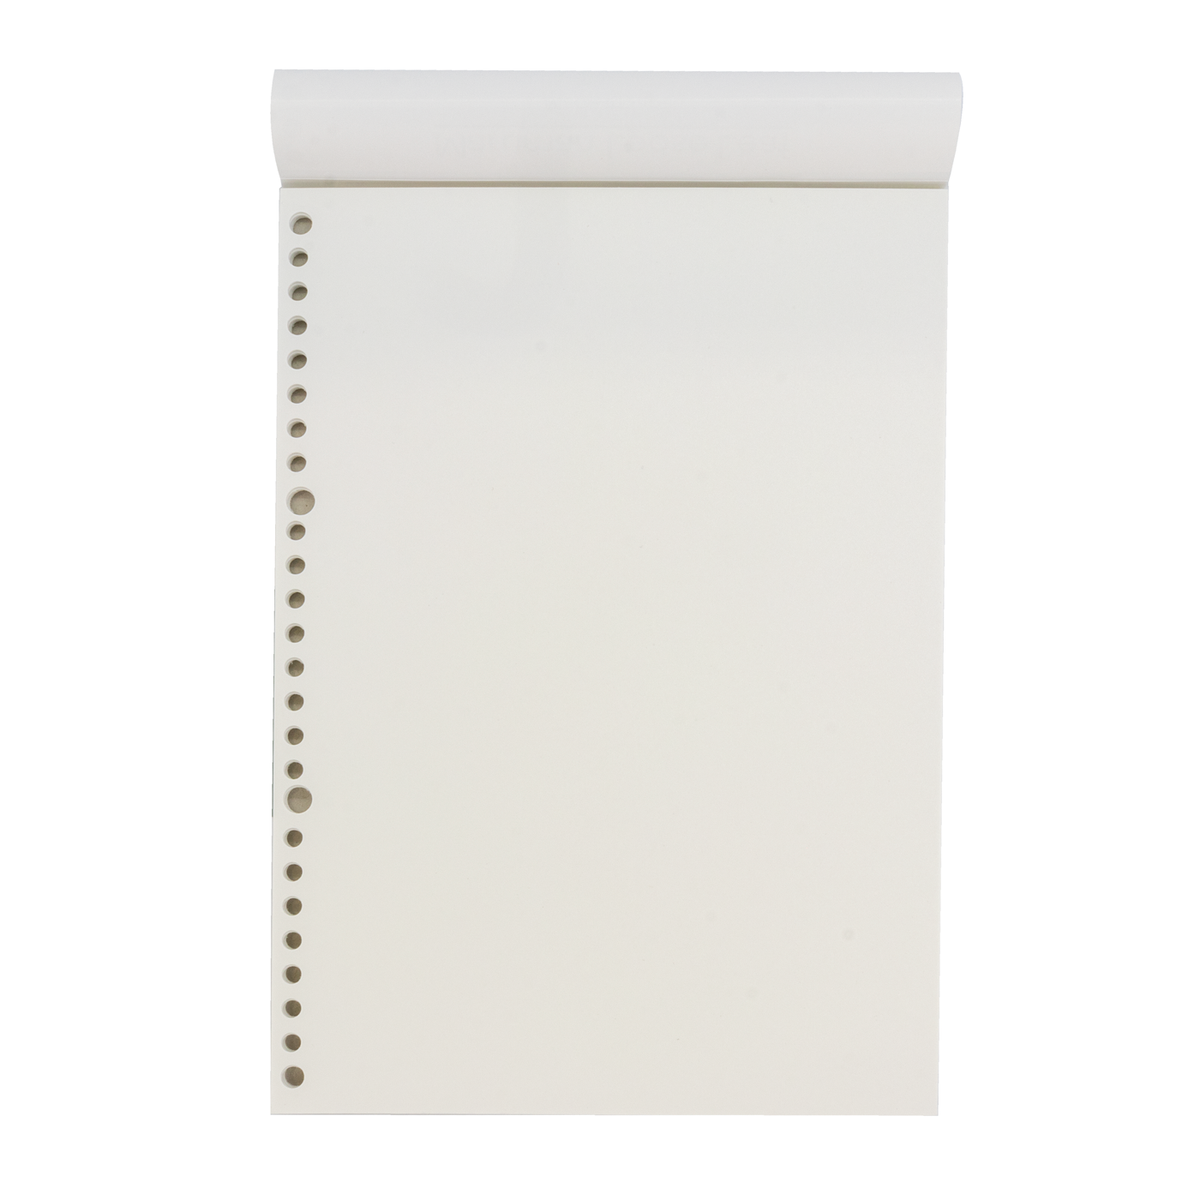 Maruman Loose Leaf Paper - B5 - Easy to Write - Blank